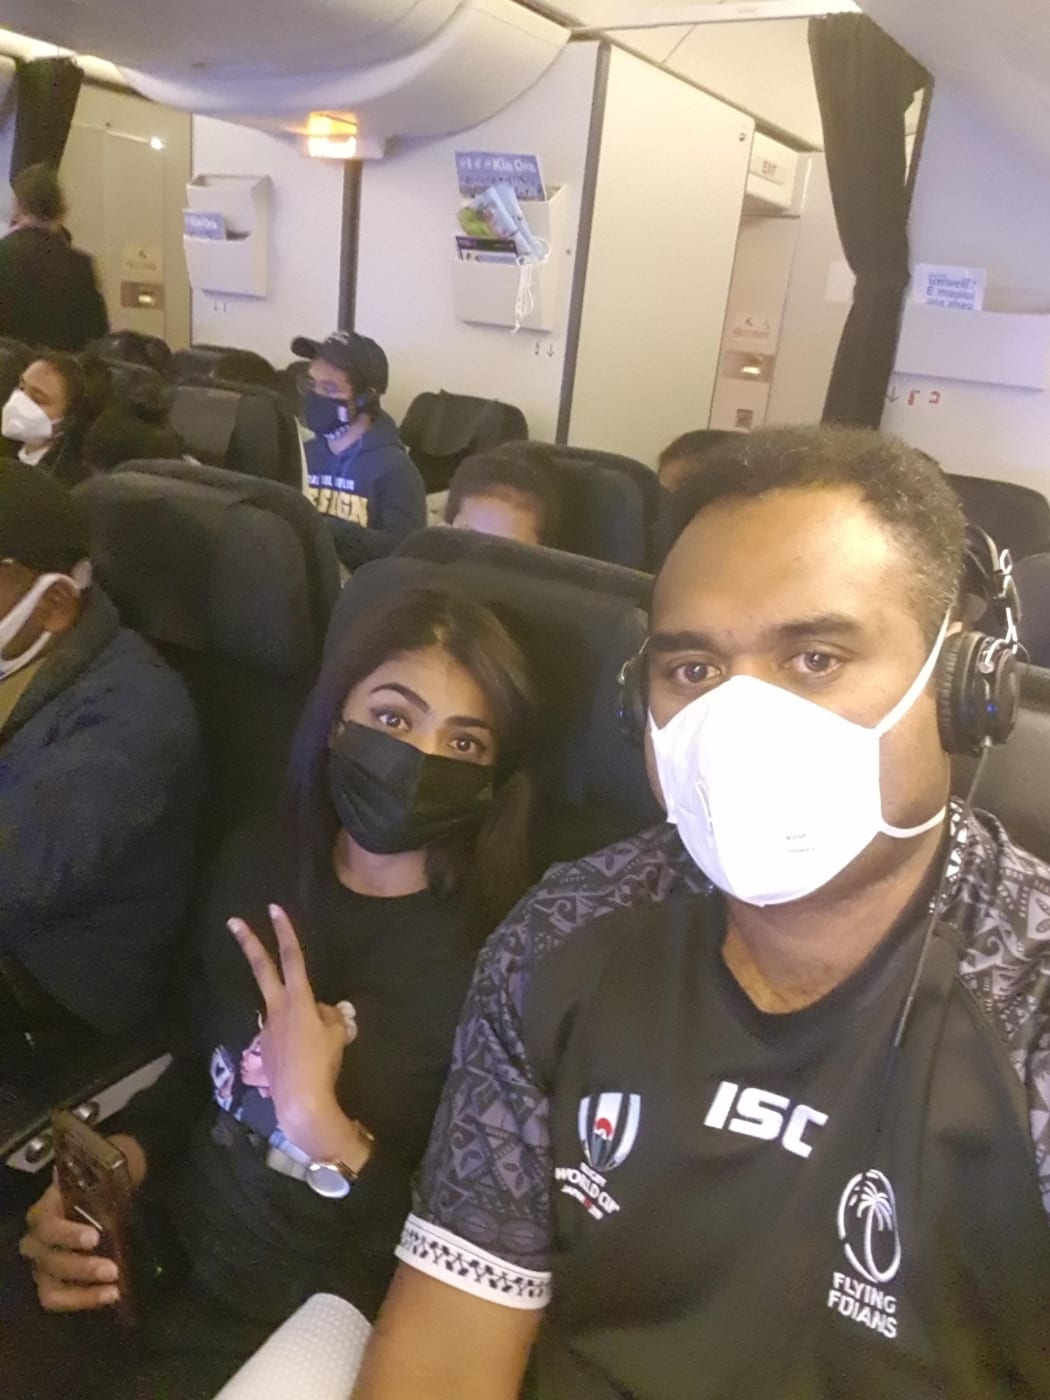 Fijian students Joe Racaca, right, and Sylvia Nandani aboard the chartered Air New Zealand flight from Wuhan.